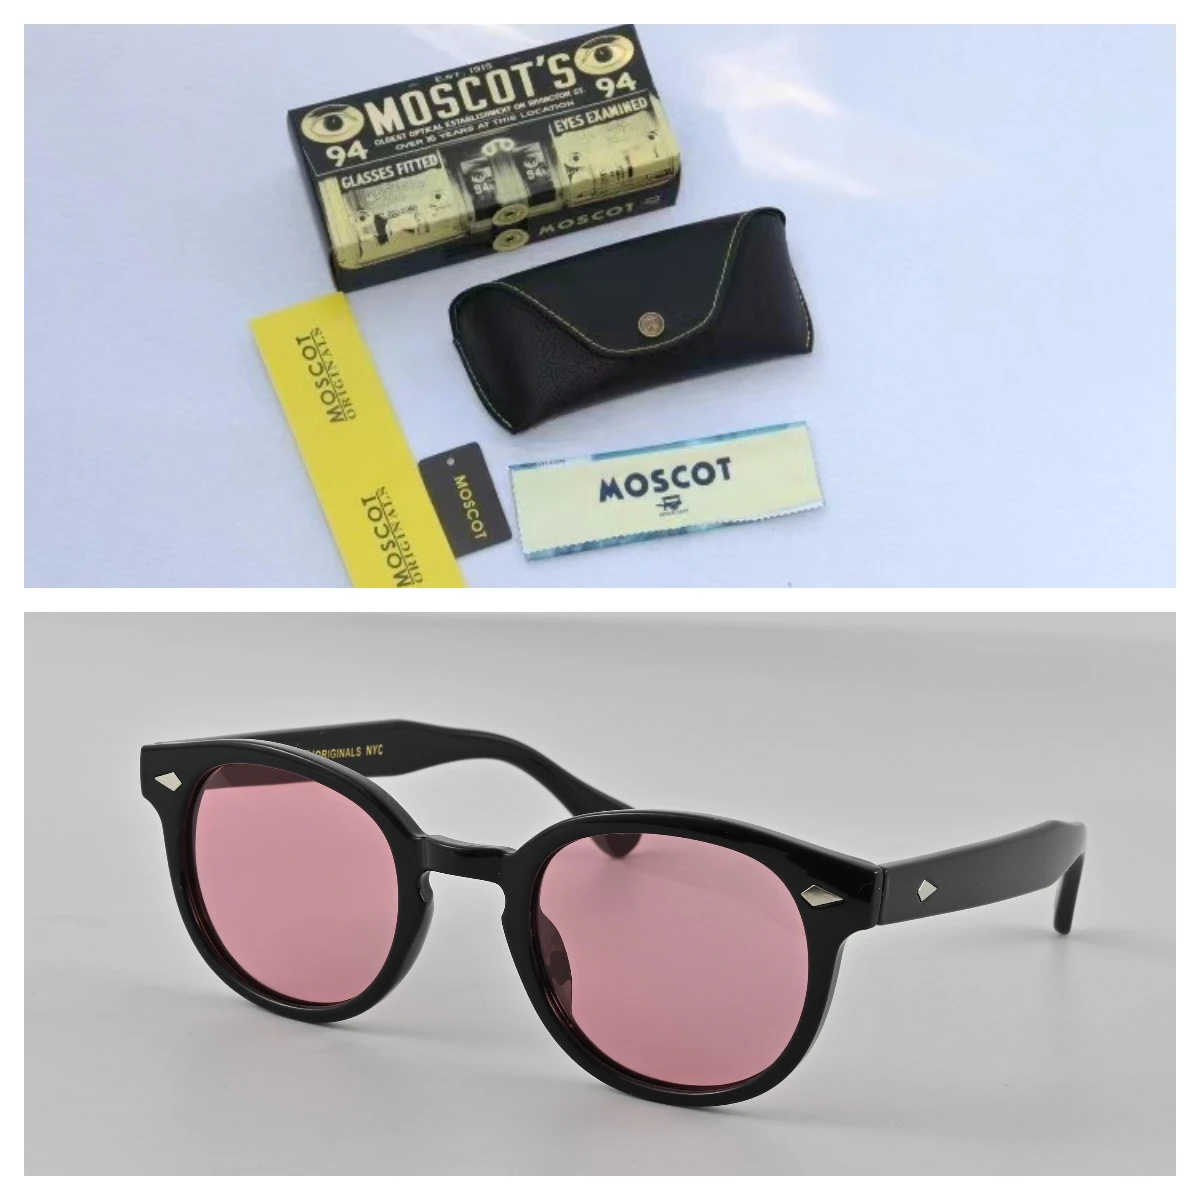 

New Arrival MOSCOT LEMTOSH Model Johnny Depp Luxury Design Unisex Sunglasses Fashion UV400 Pink Lenses Men Women Eyeglasses